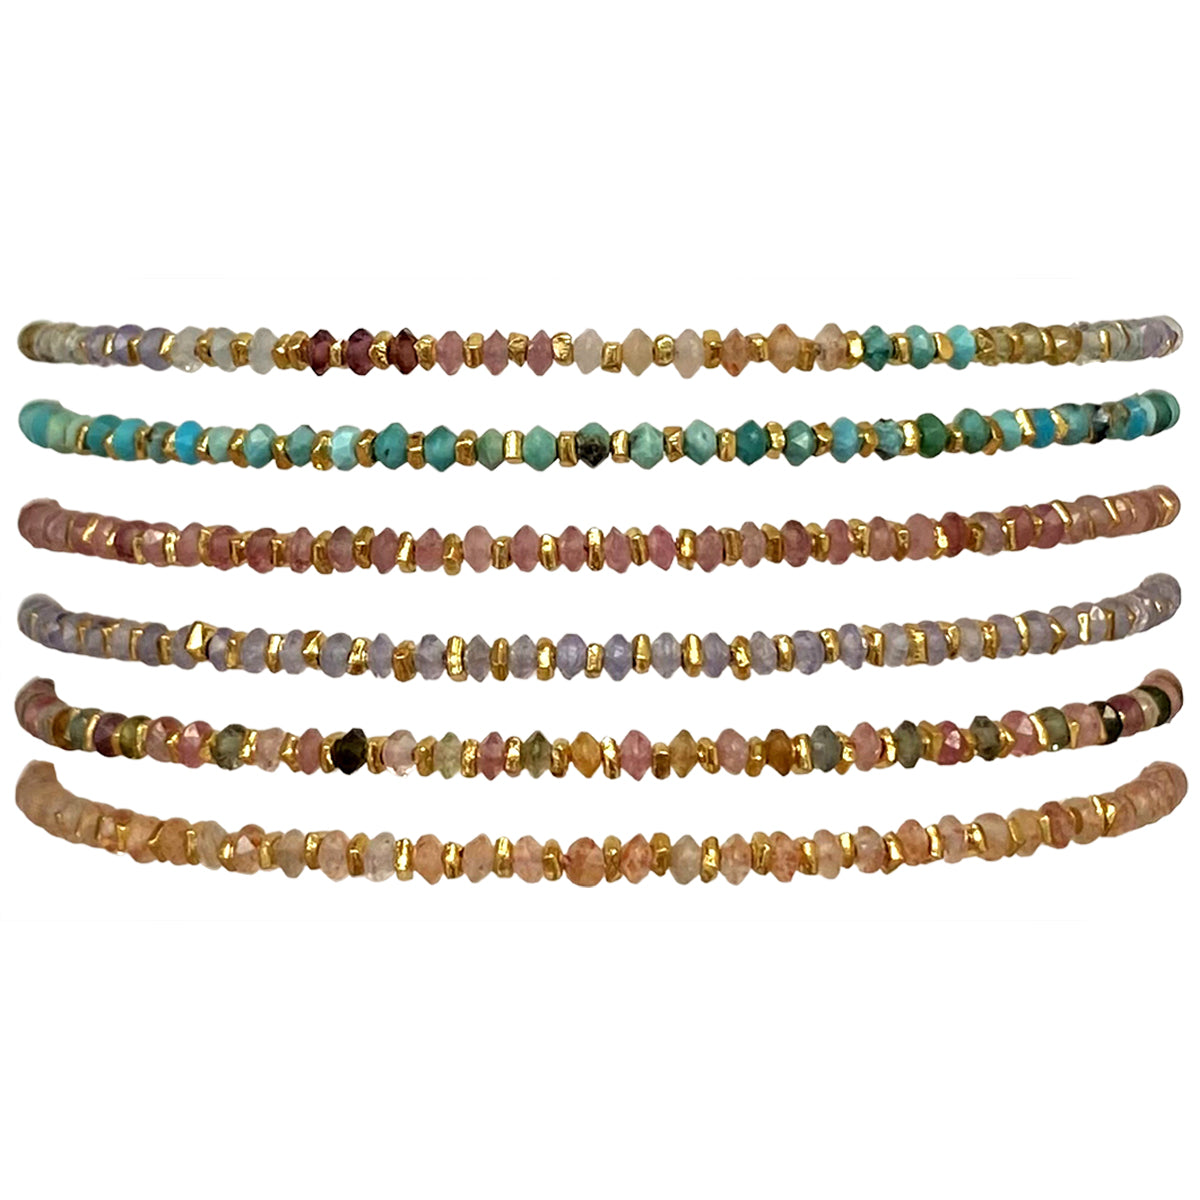 Handmade Violet Women's Bracelet Featuring Gold and Tourmaline Stones